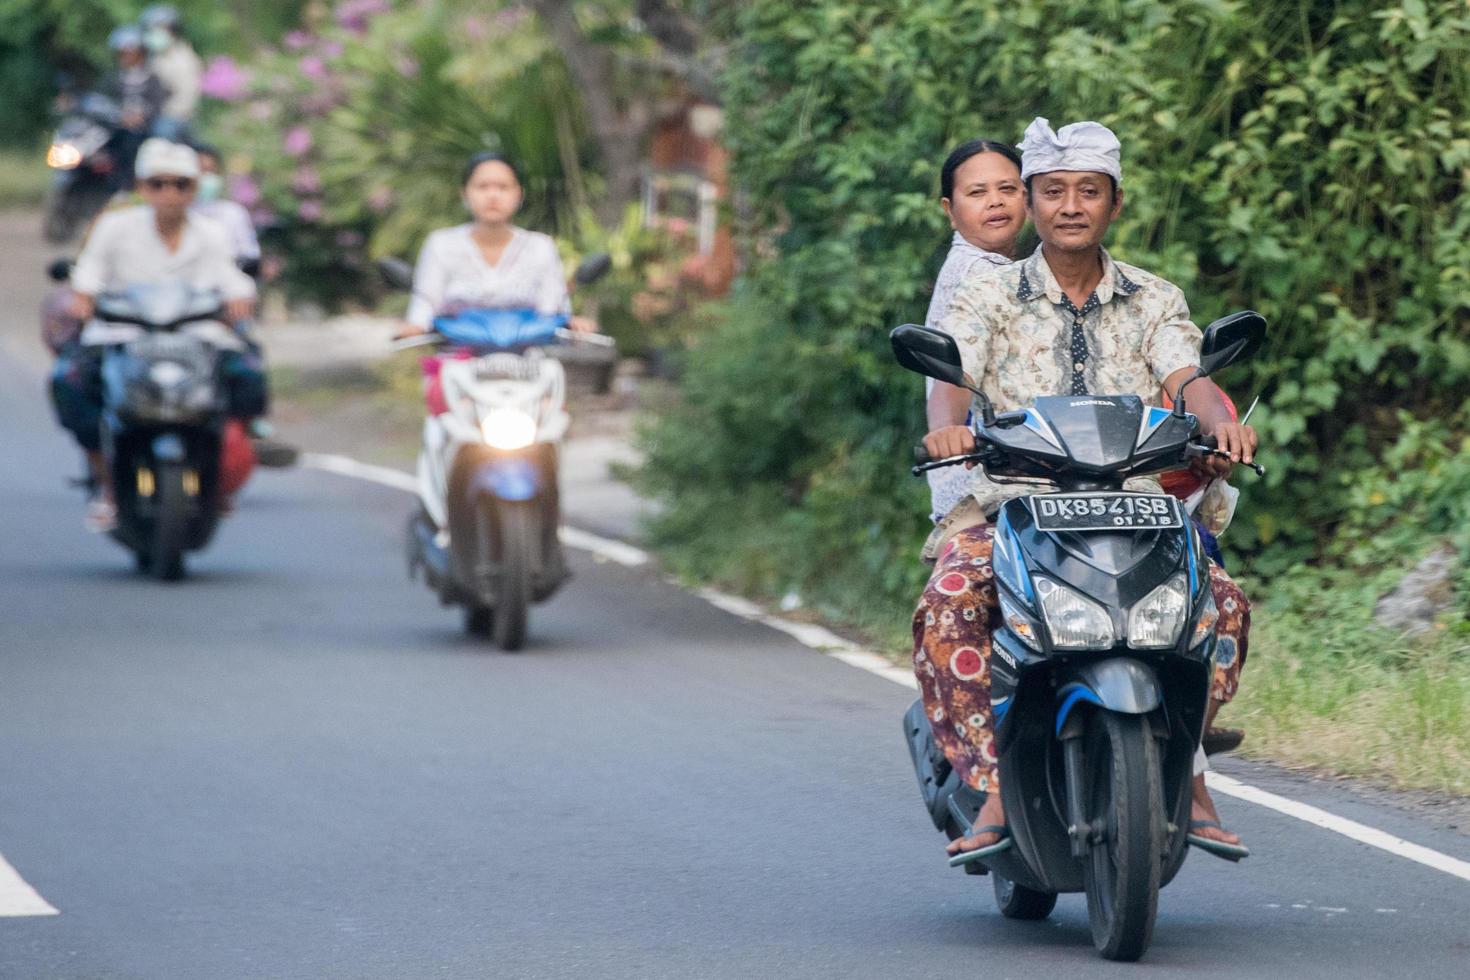 DENPASAR, BALI, INDONESIA - AUGUST 15, 2016 - Indonesia people biking photo